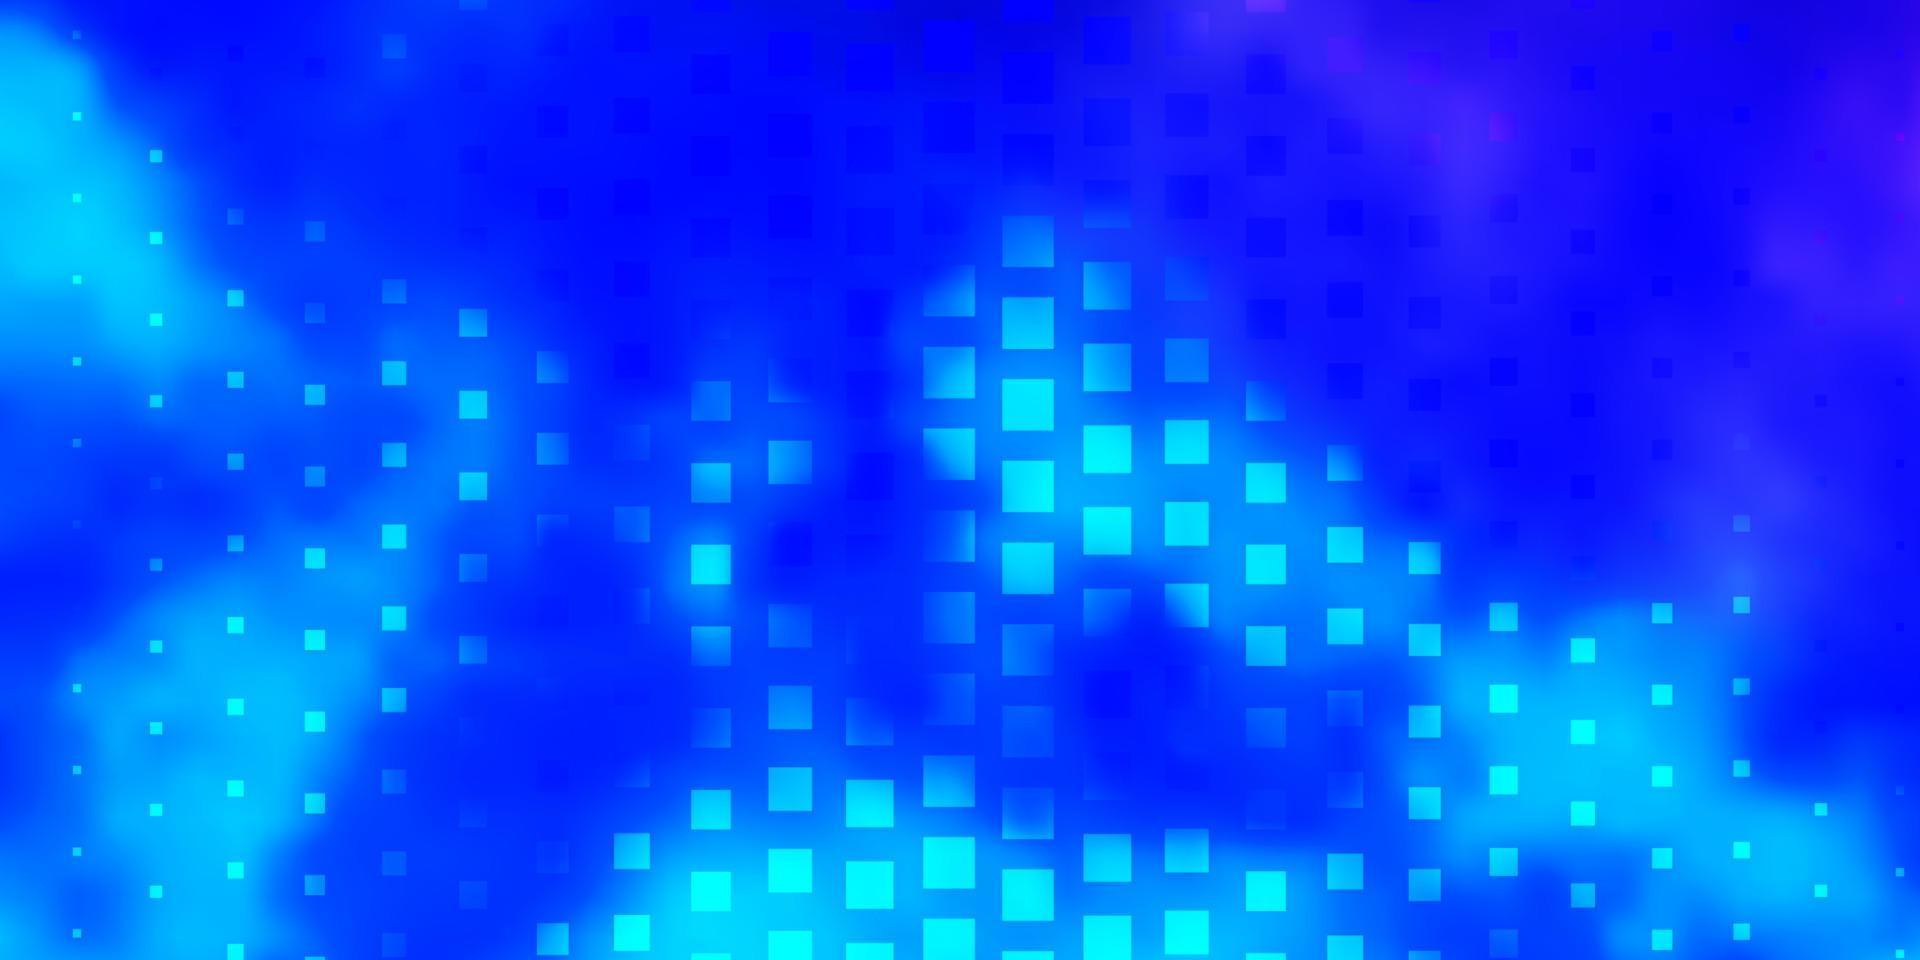 ljusrosa, blå vektorbakgrund med rektanglar. vektor